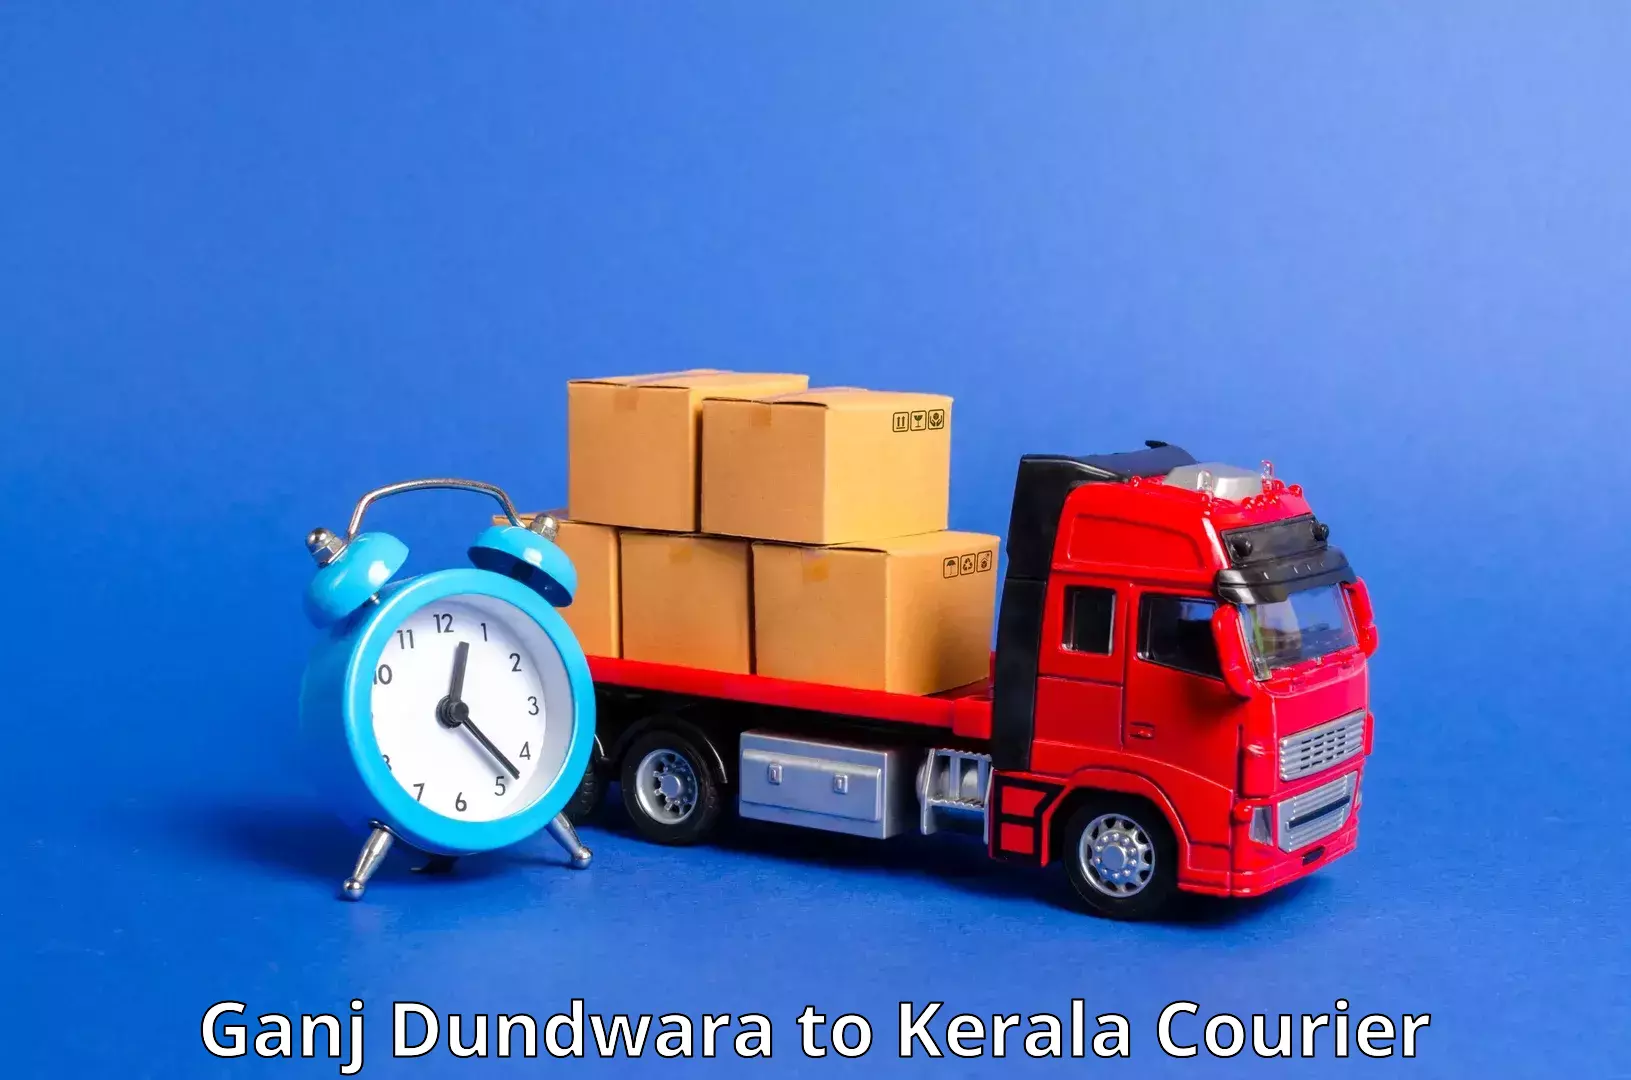 Express delivery network Ganj Dundwara to Koyilandy